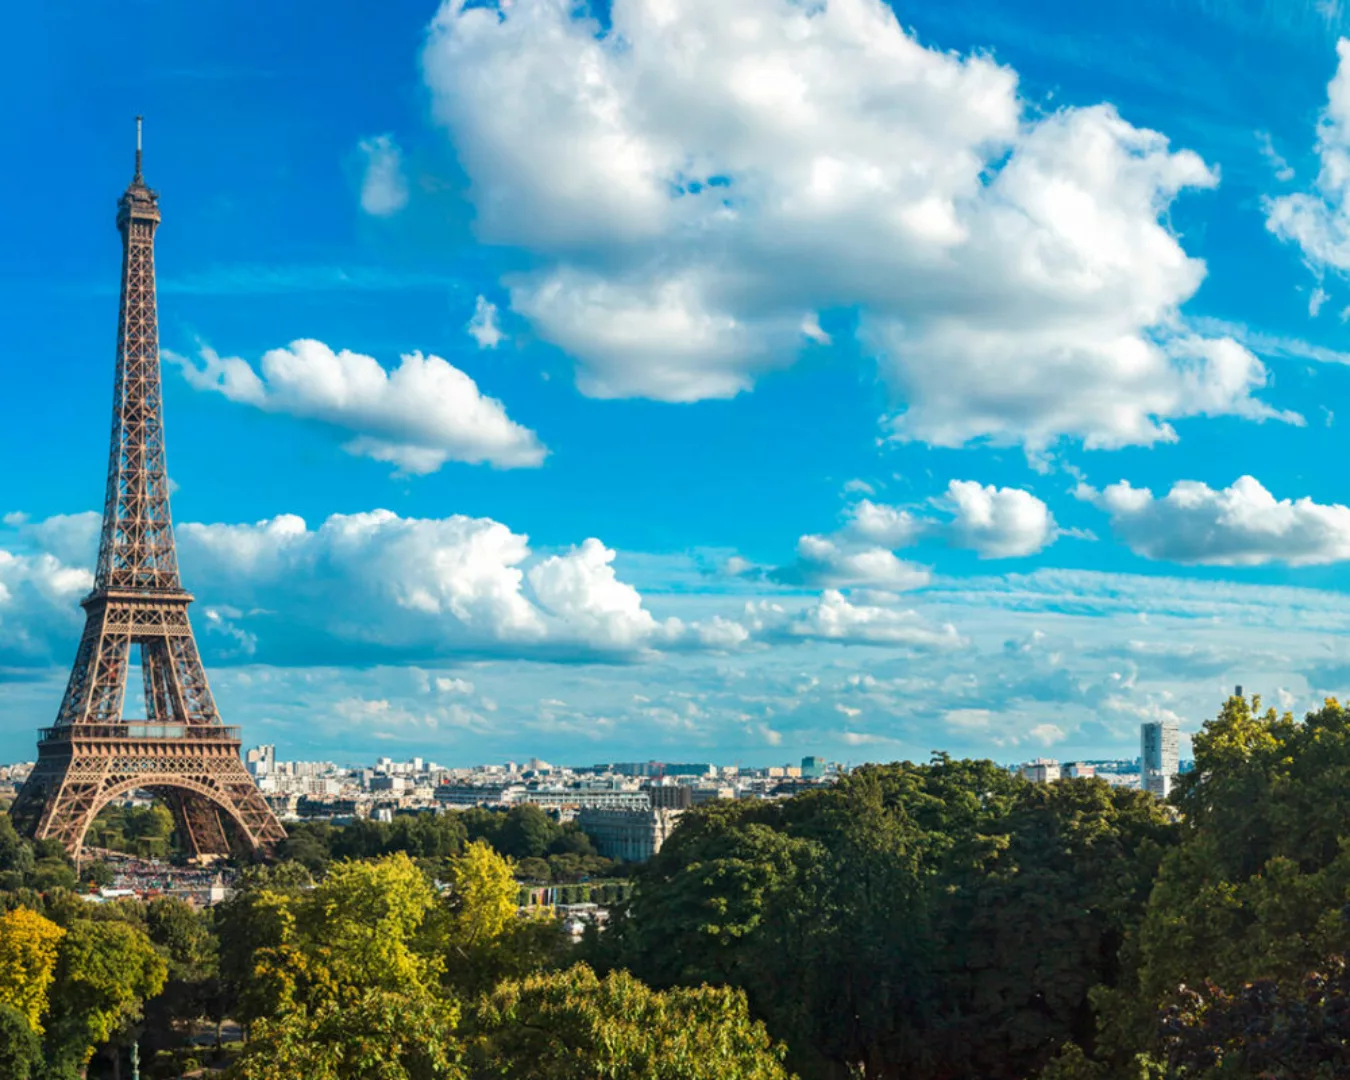 Fototapete "Eiffelturm" 4,00x2,50 m / Glattvlies Brillant günstig online kaufen